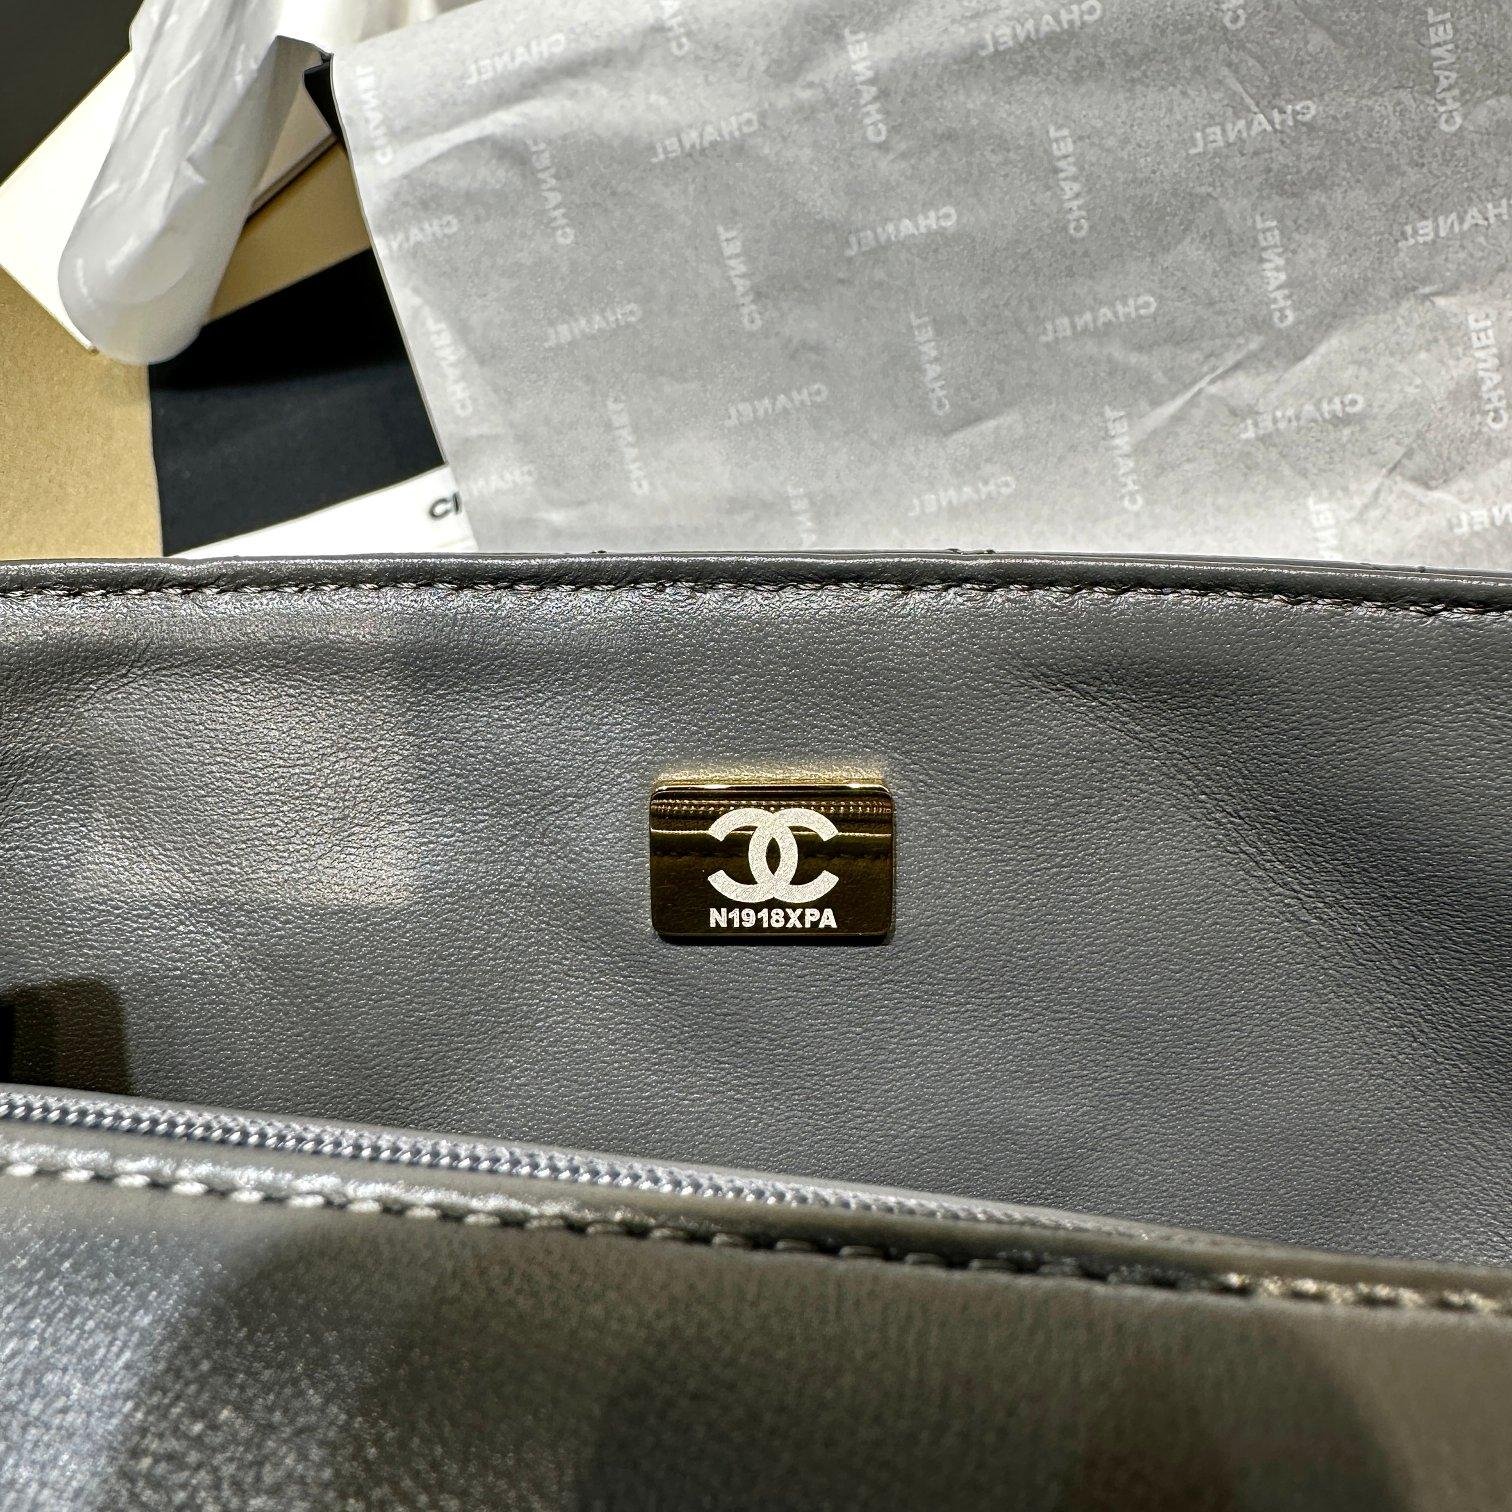 New Arrival        Handbags CF Mini        Bag Fashion Bag Valentine Gifts 8